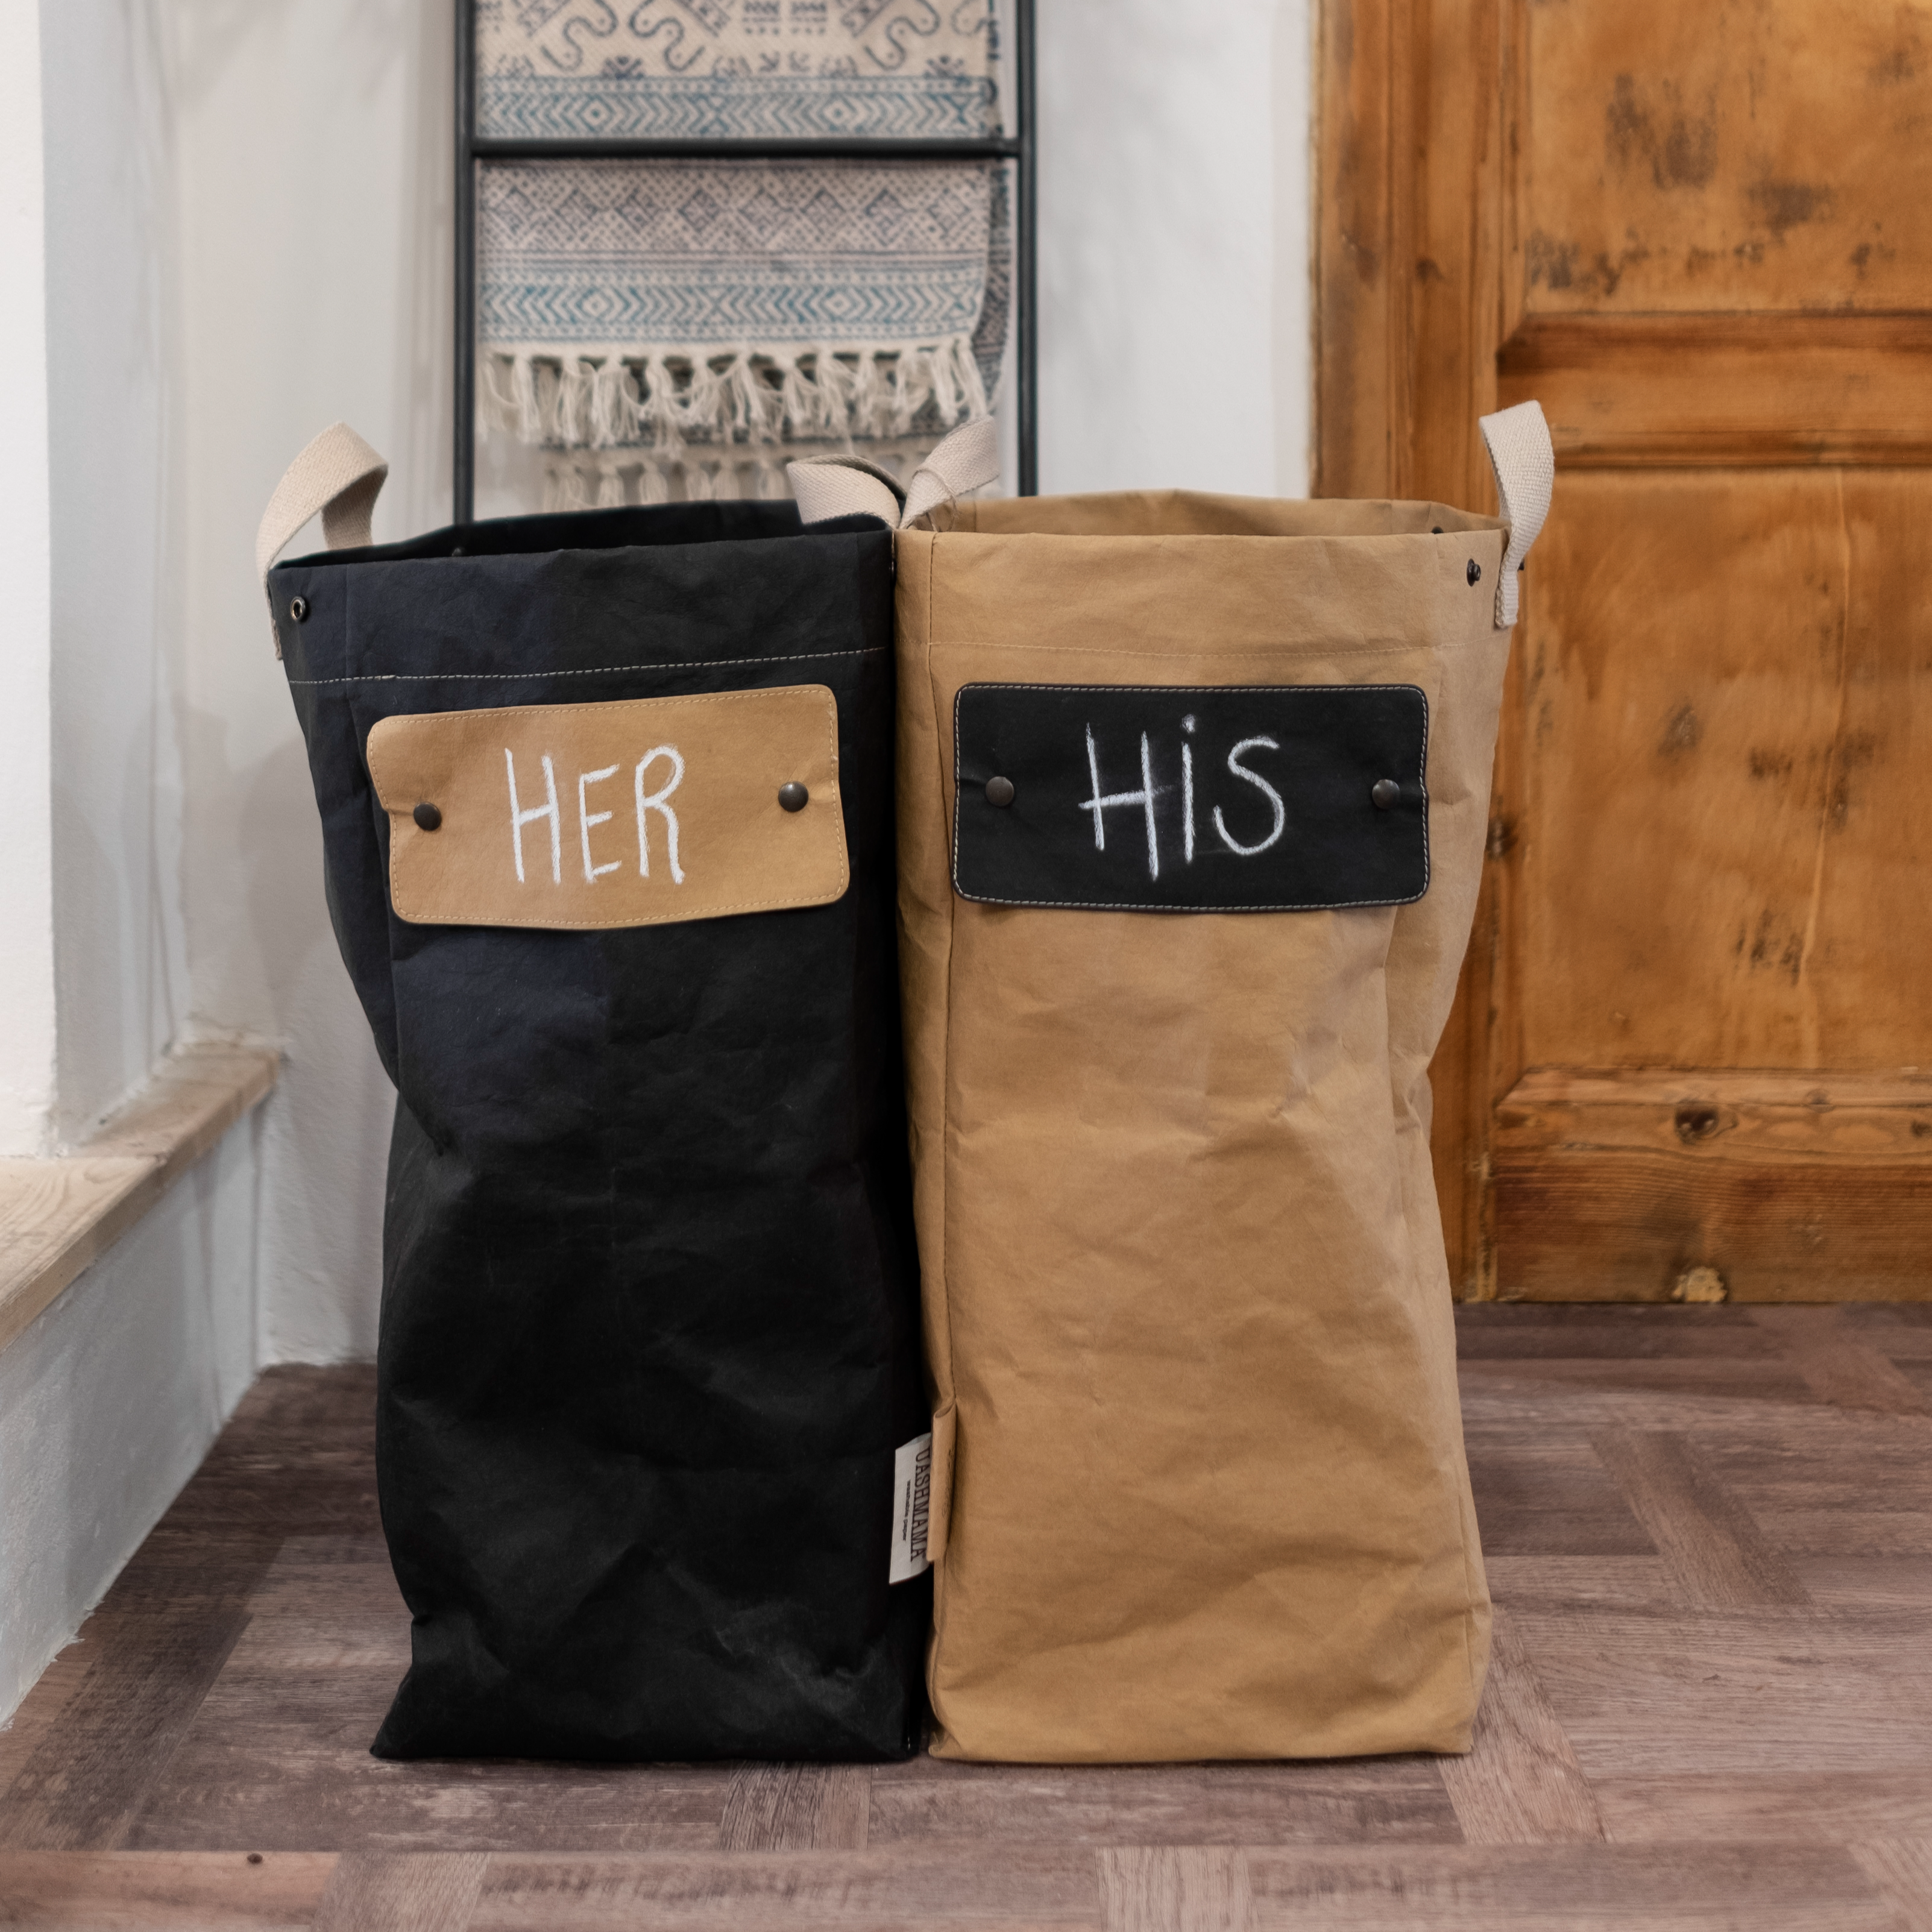 Uashmama Laundry Bag  Modular Snap & Tote, Easy Carry